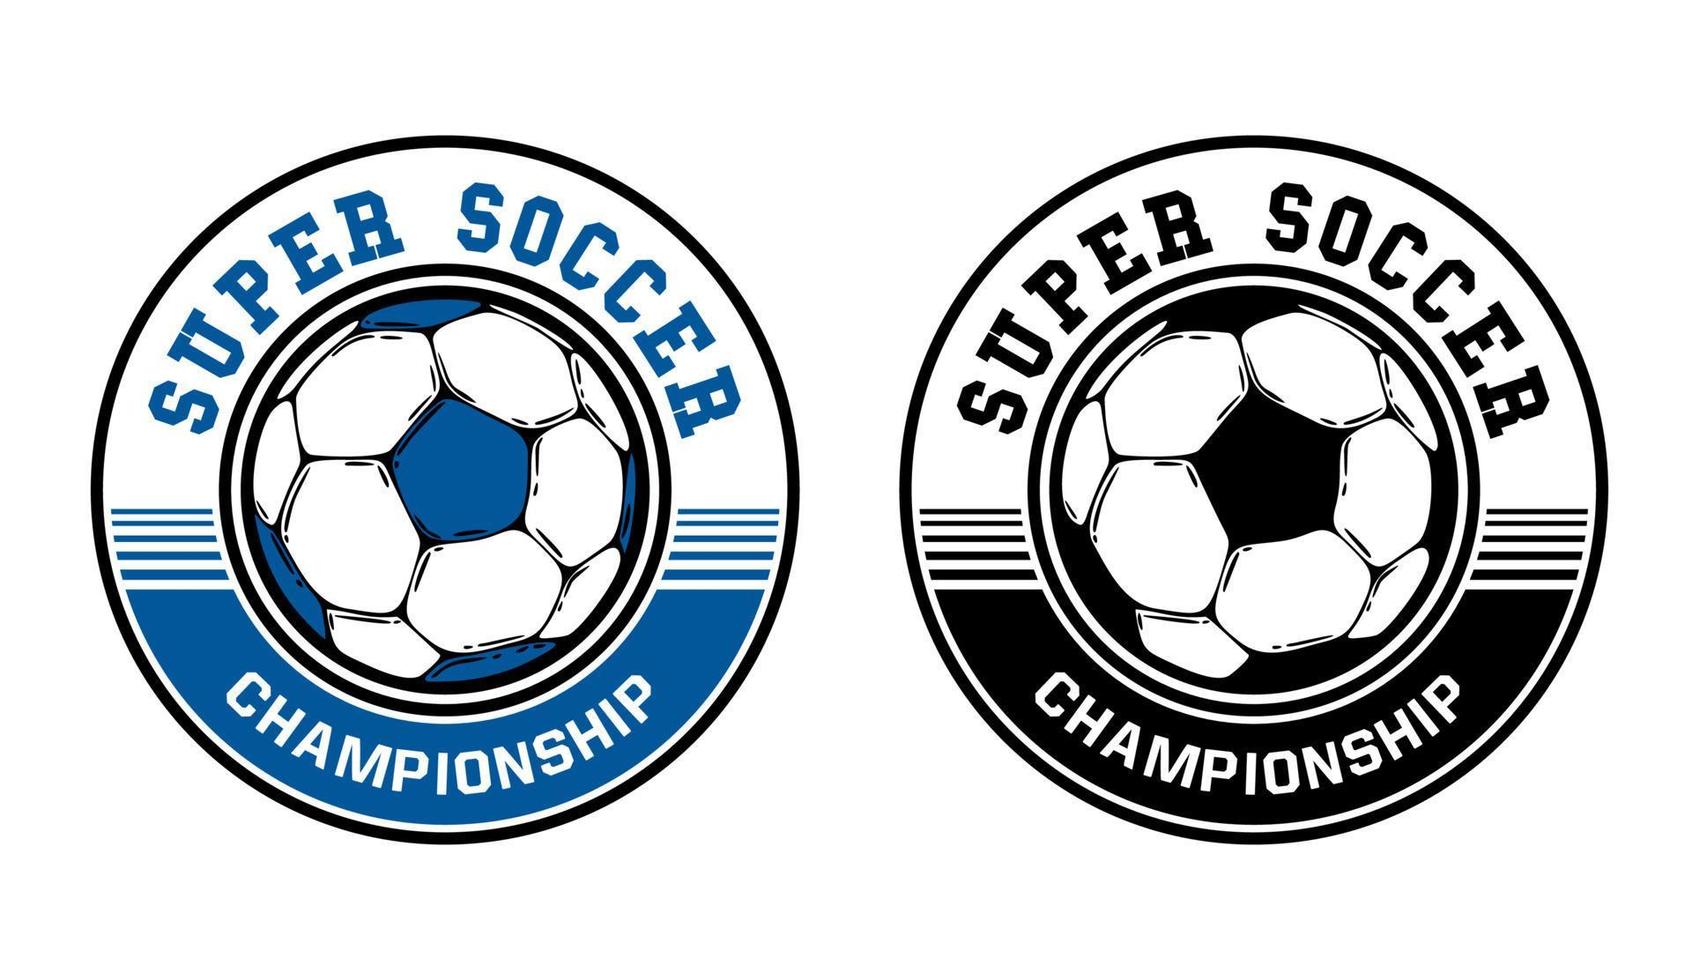 logo design super soccer championship with football vintage illustration vector